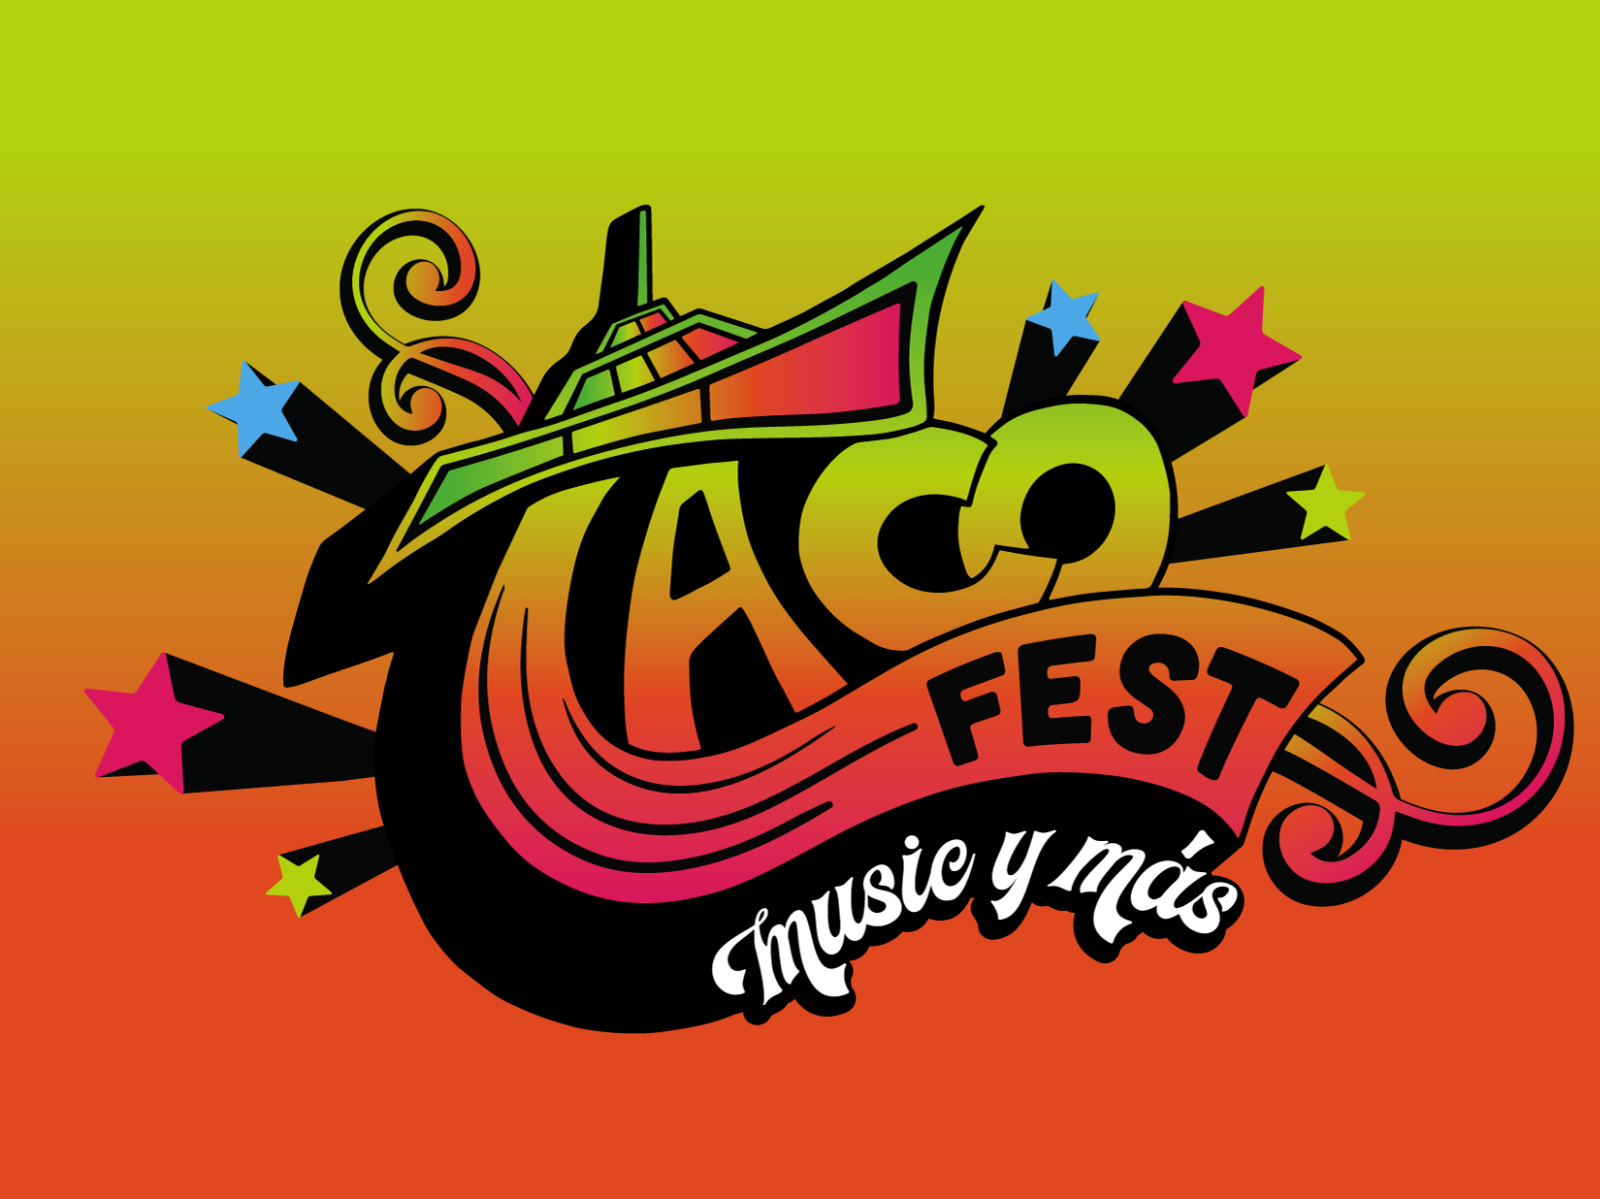 Taco Fest San Antonio 2020 by John Mata on Dribbble